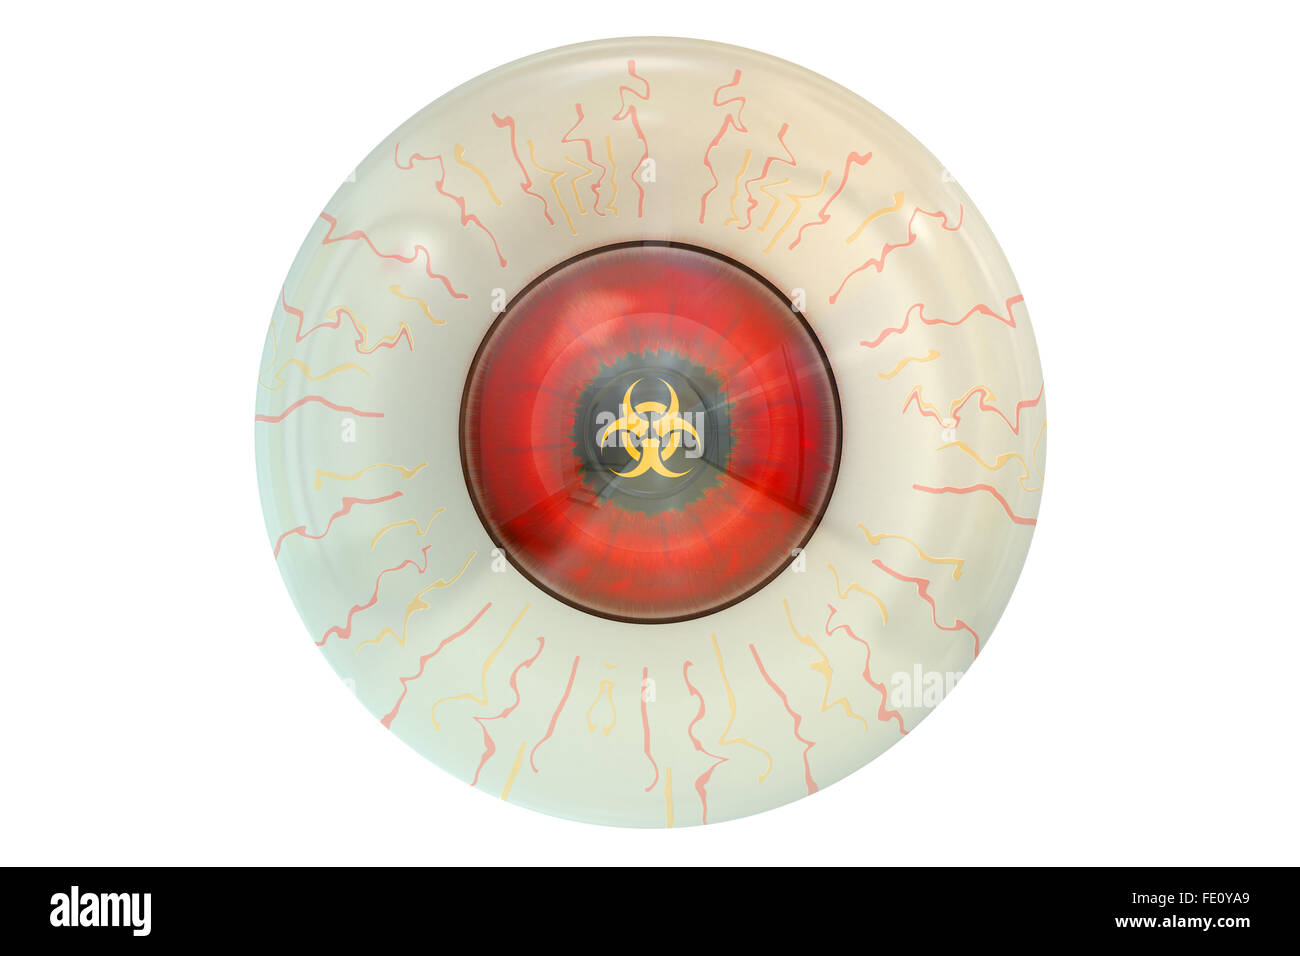 Human eye with biohazard symbol Stock Photo